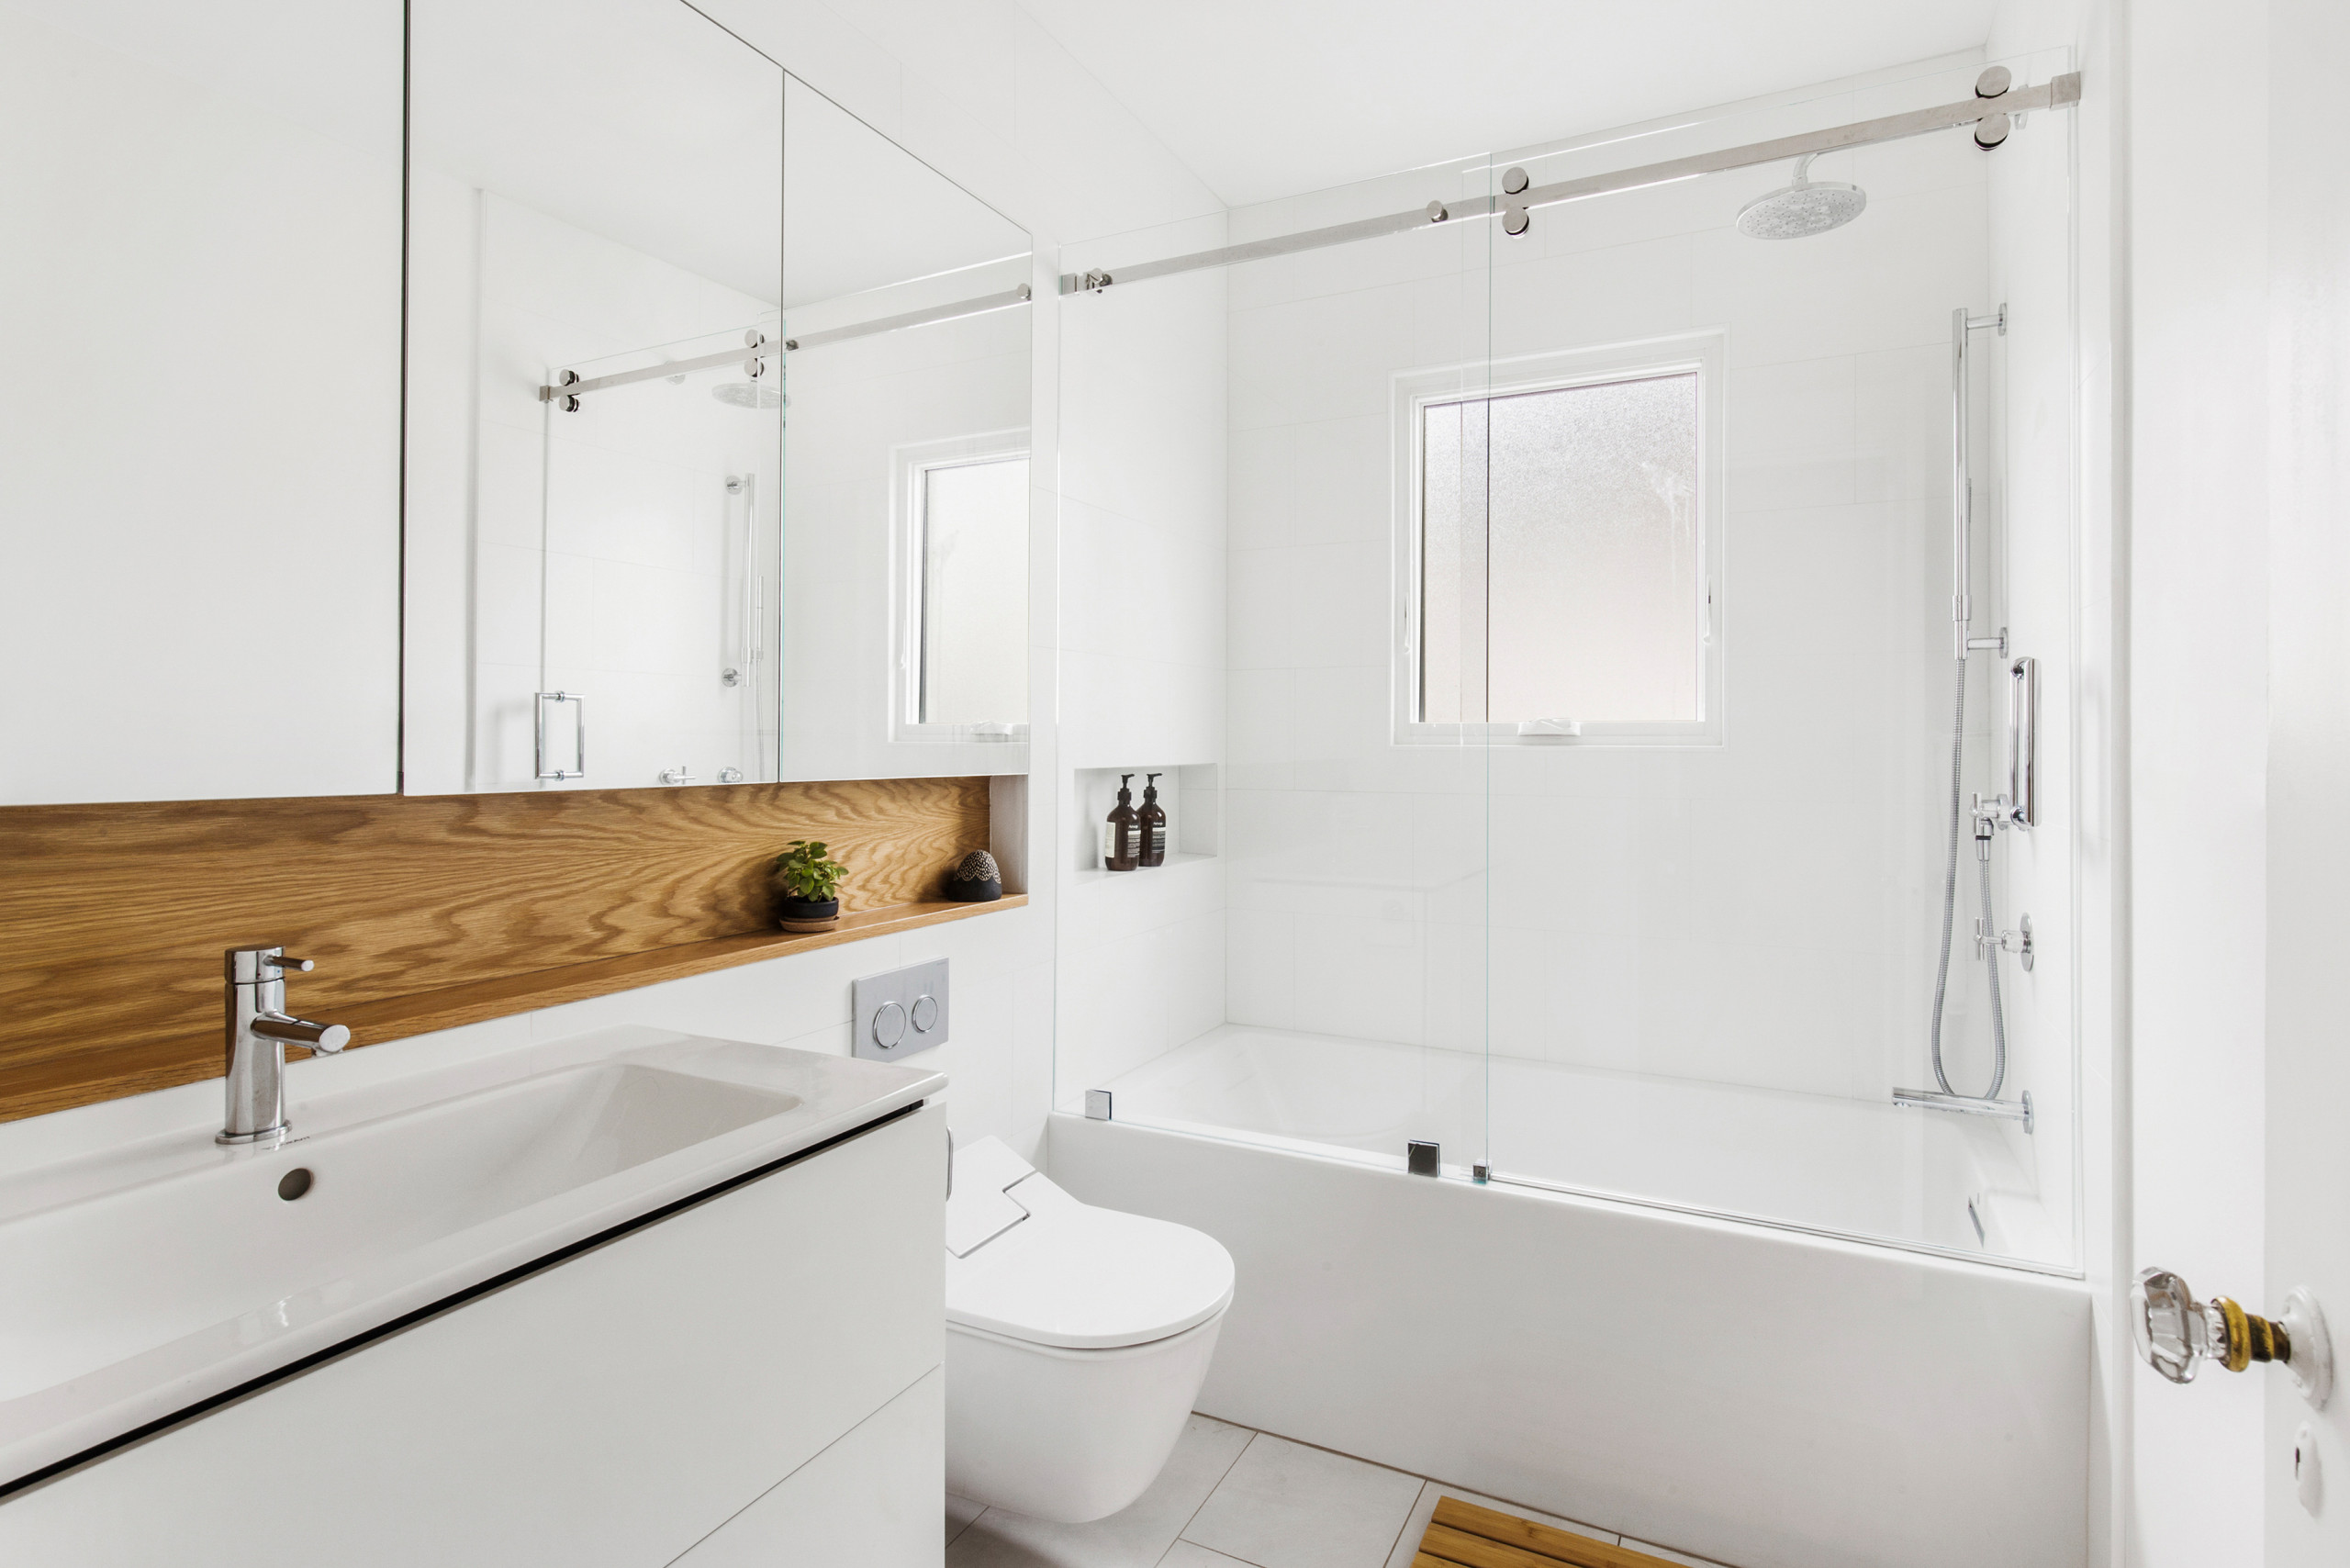 Tub Shower Combo Pictures Ideas, Bathtub Shower Combination Designs